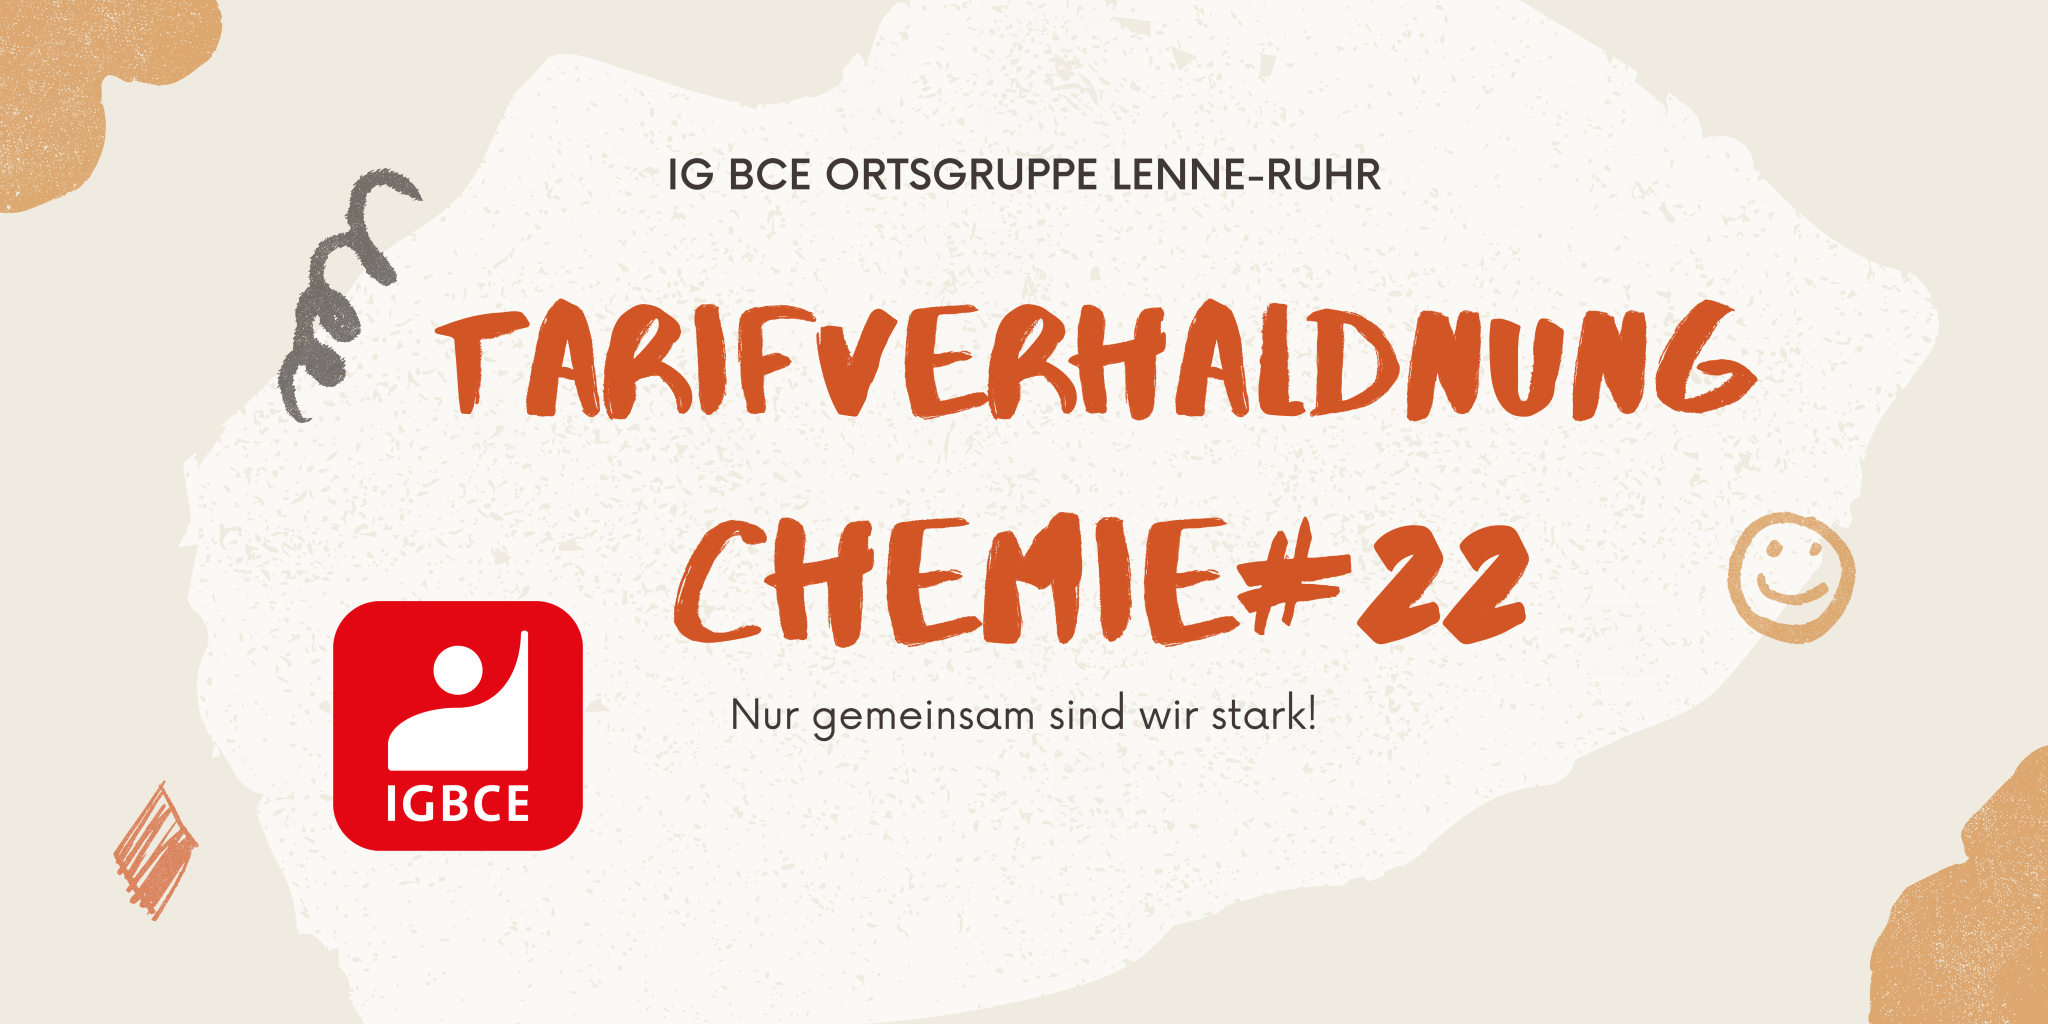 Tarifrunde #Chemie22